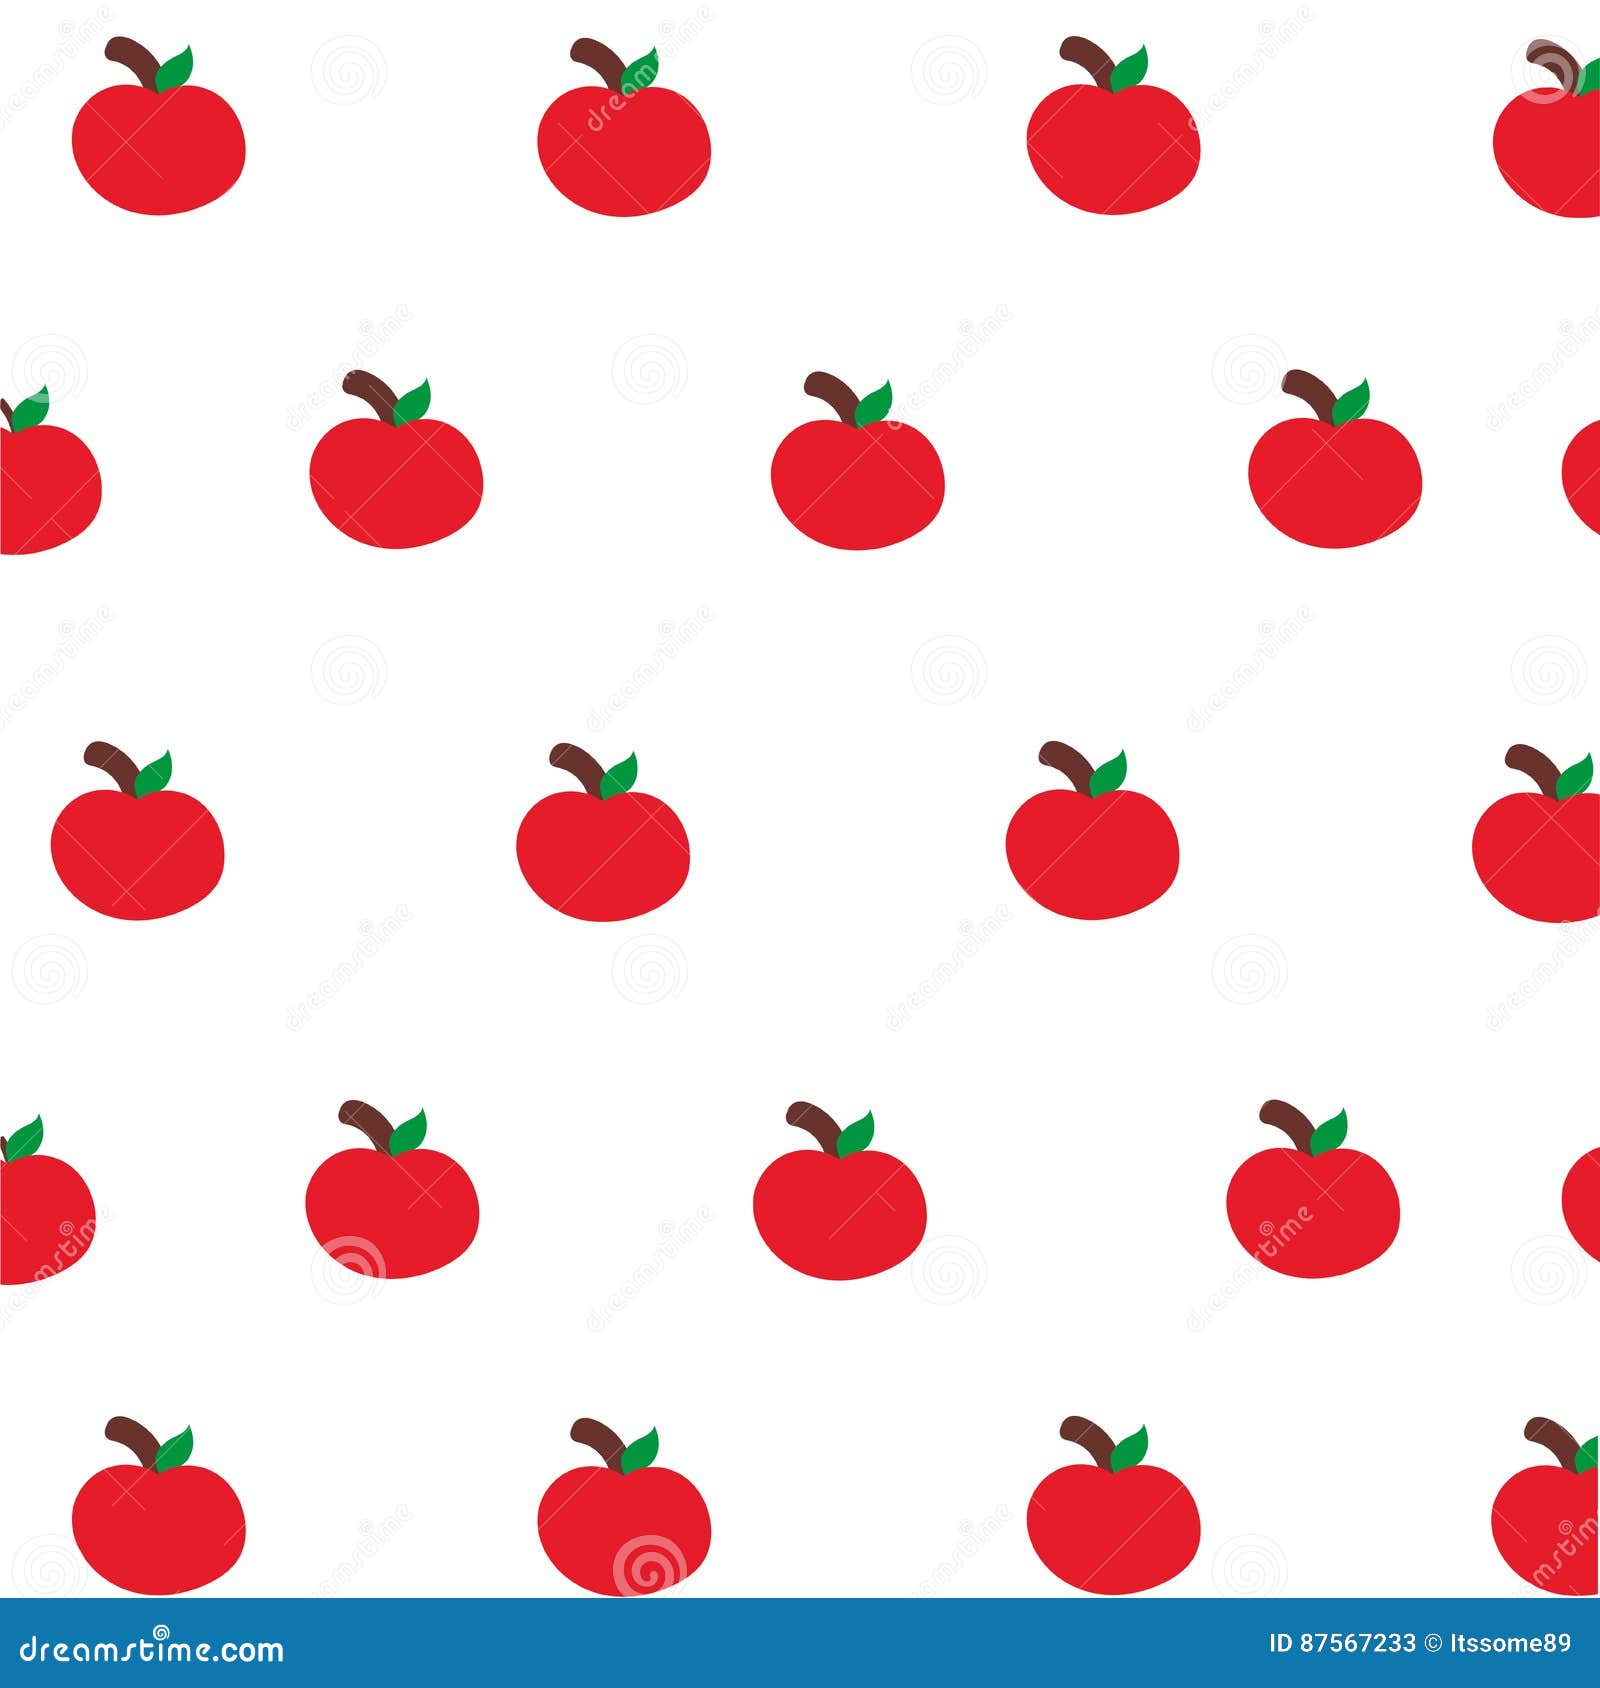 Cute red apple wallpaper stock vector. Illustration of fruit - 87567233